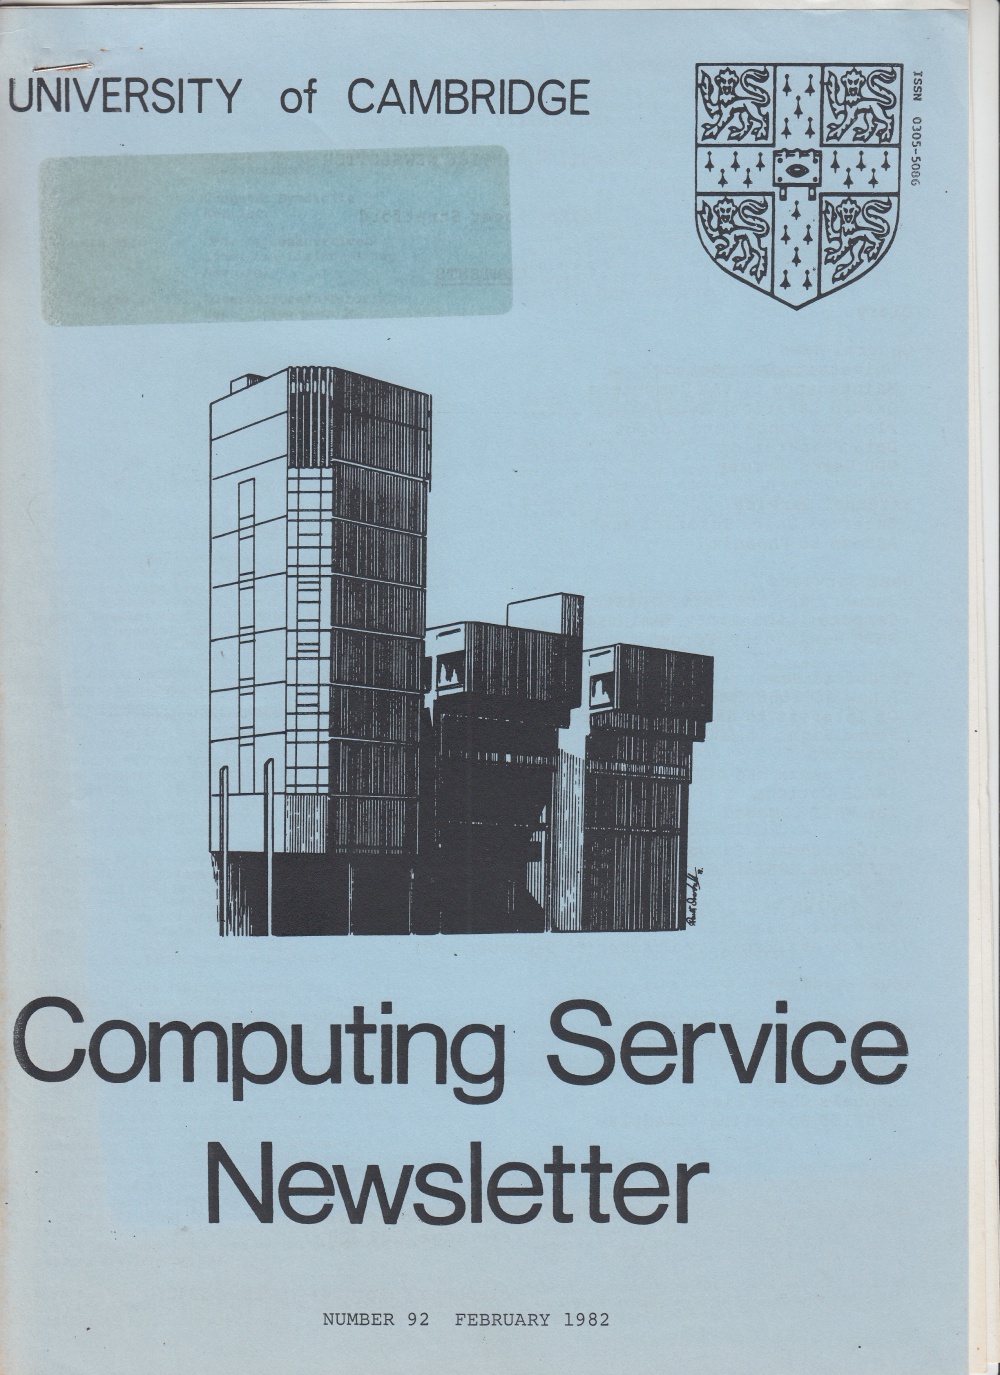 Article: University of Cambridge Computing Service February 1982 Newsletter 92